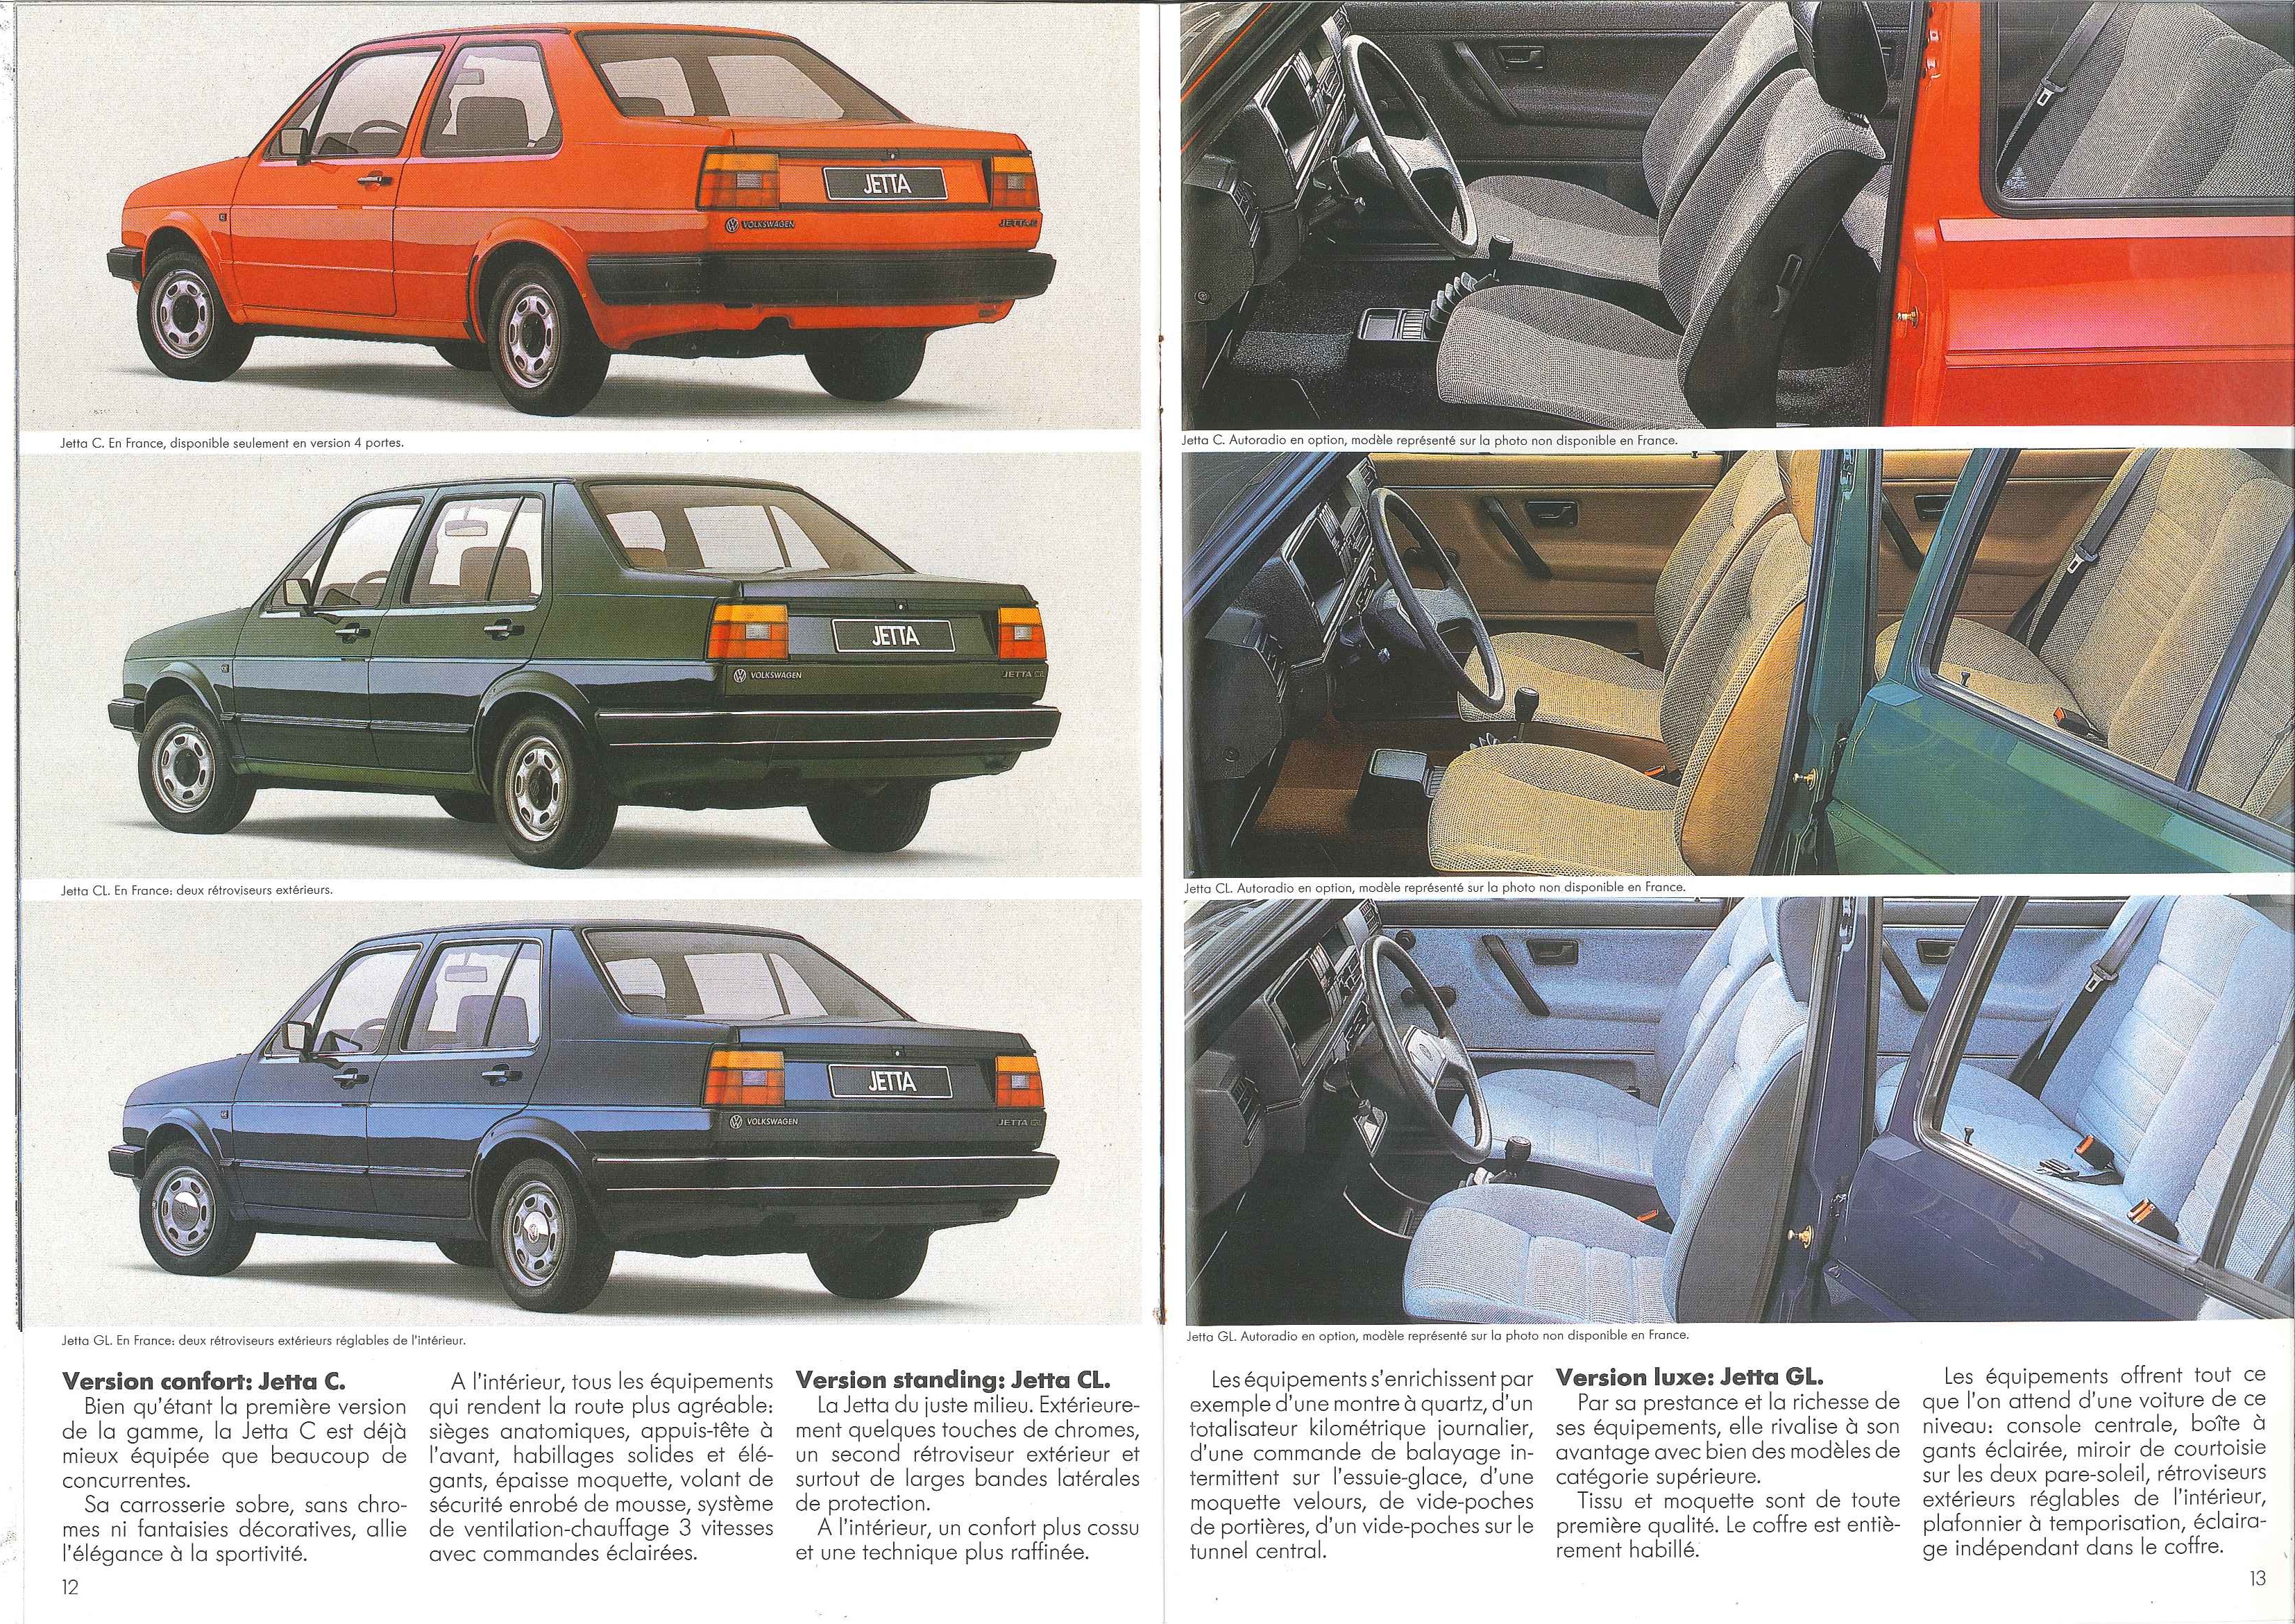 TheSamba.com :: VW Archives - 1984 VW Jetta Brochure - French